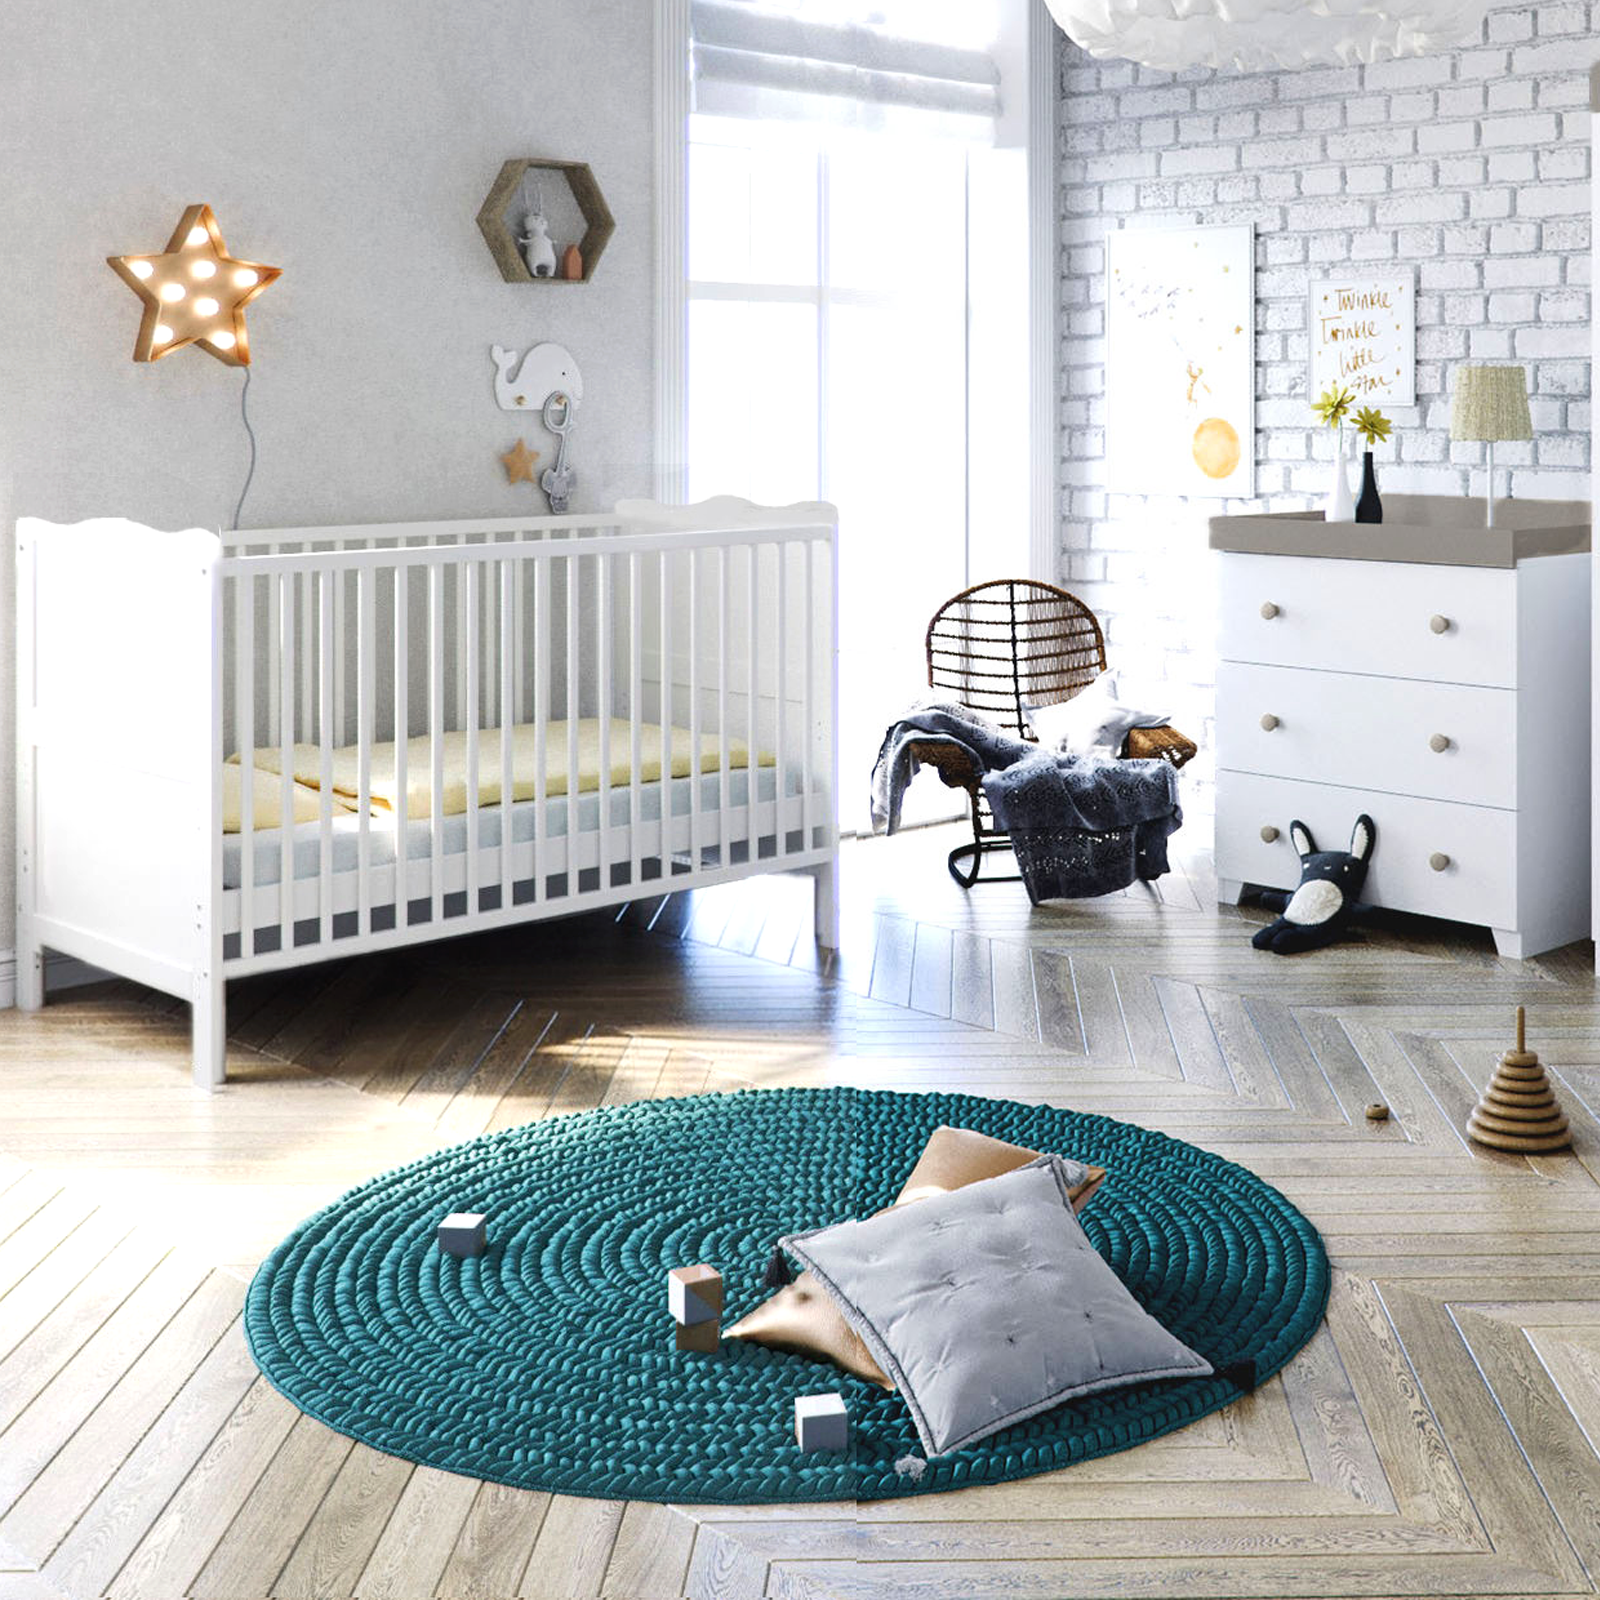 Puggle Henbury Cot Bed 4 Piece Nursery Furniture Set With Eco Fibre Mattress - White & Grey